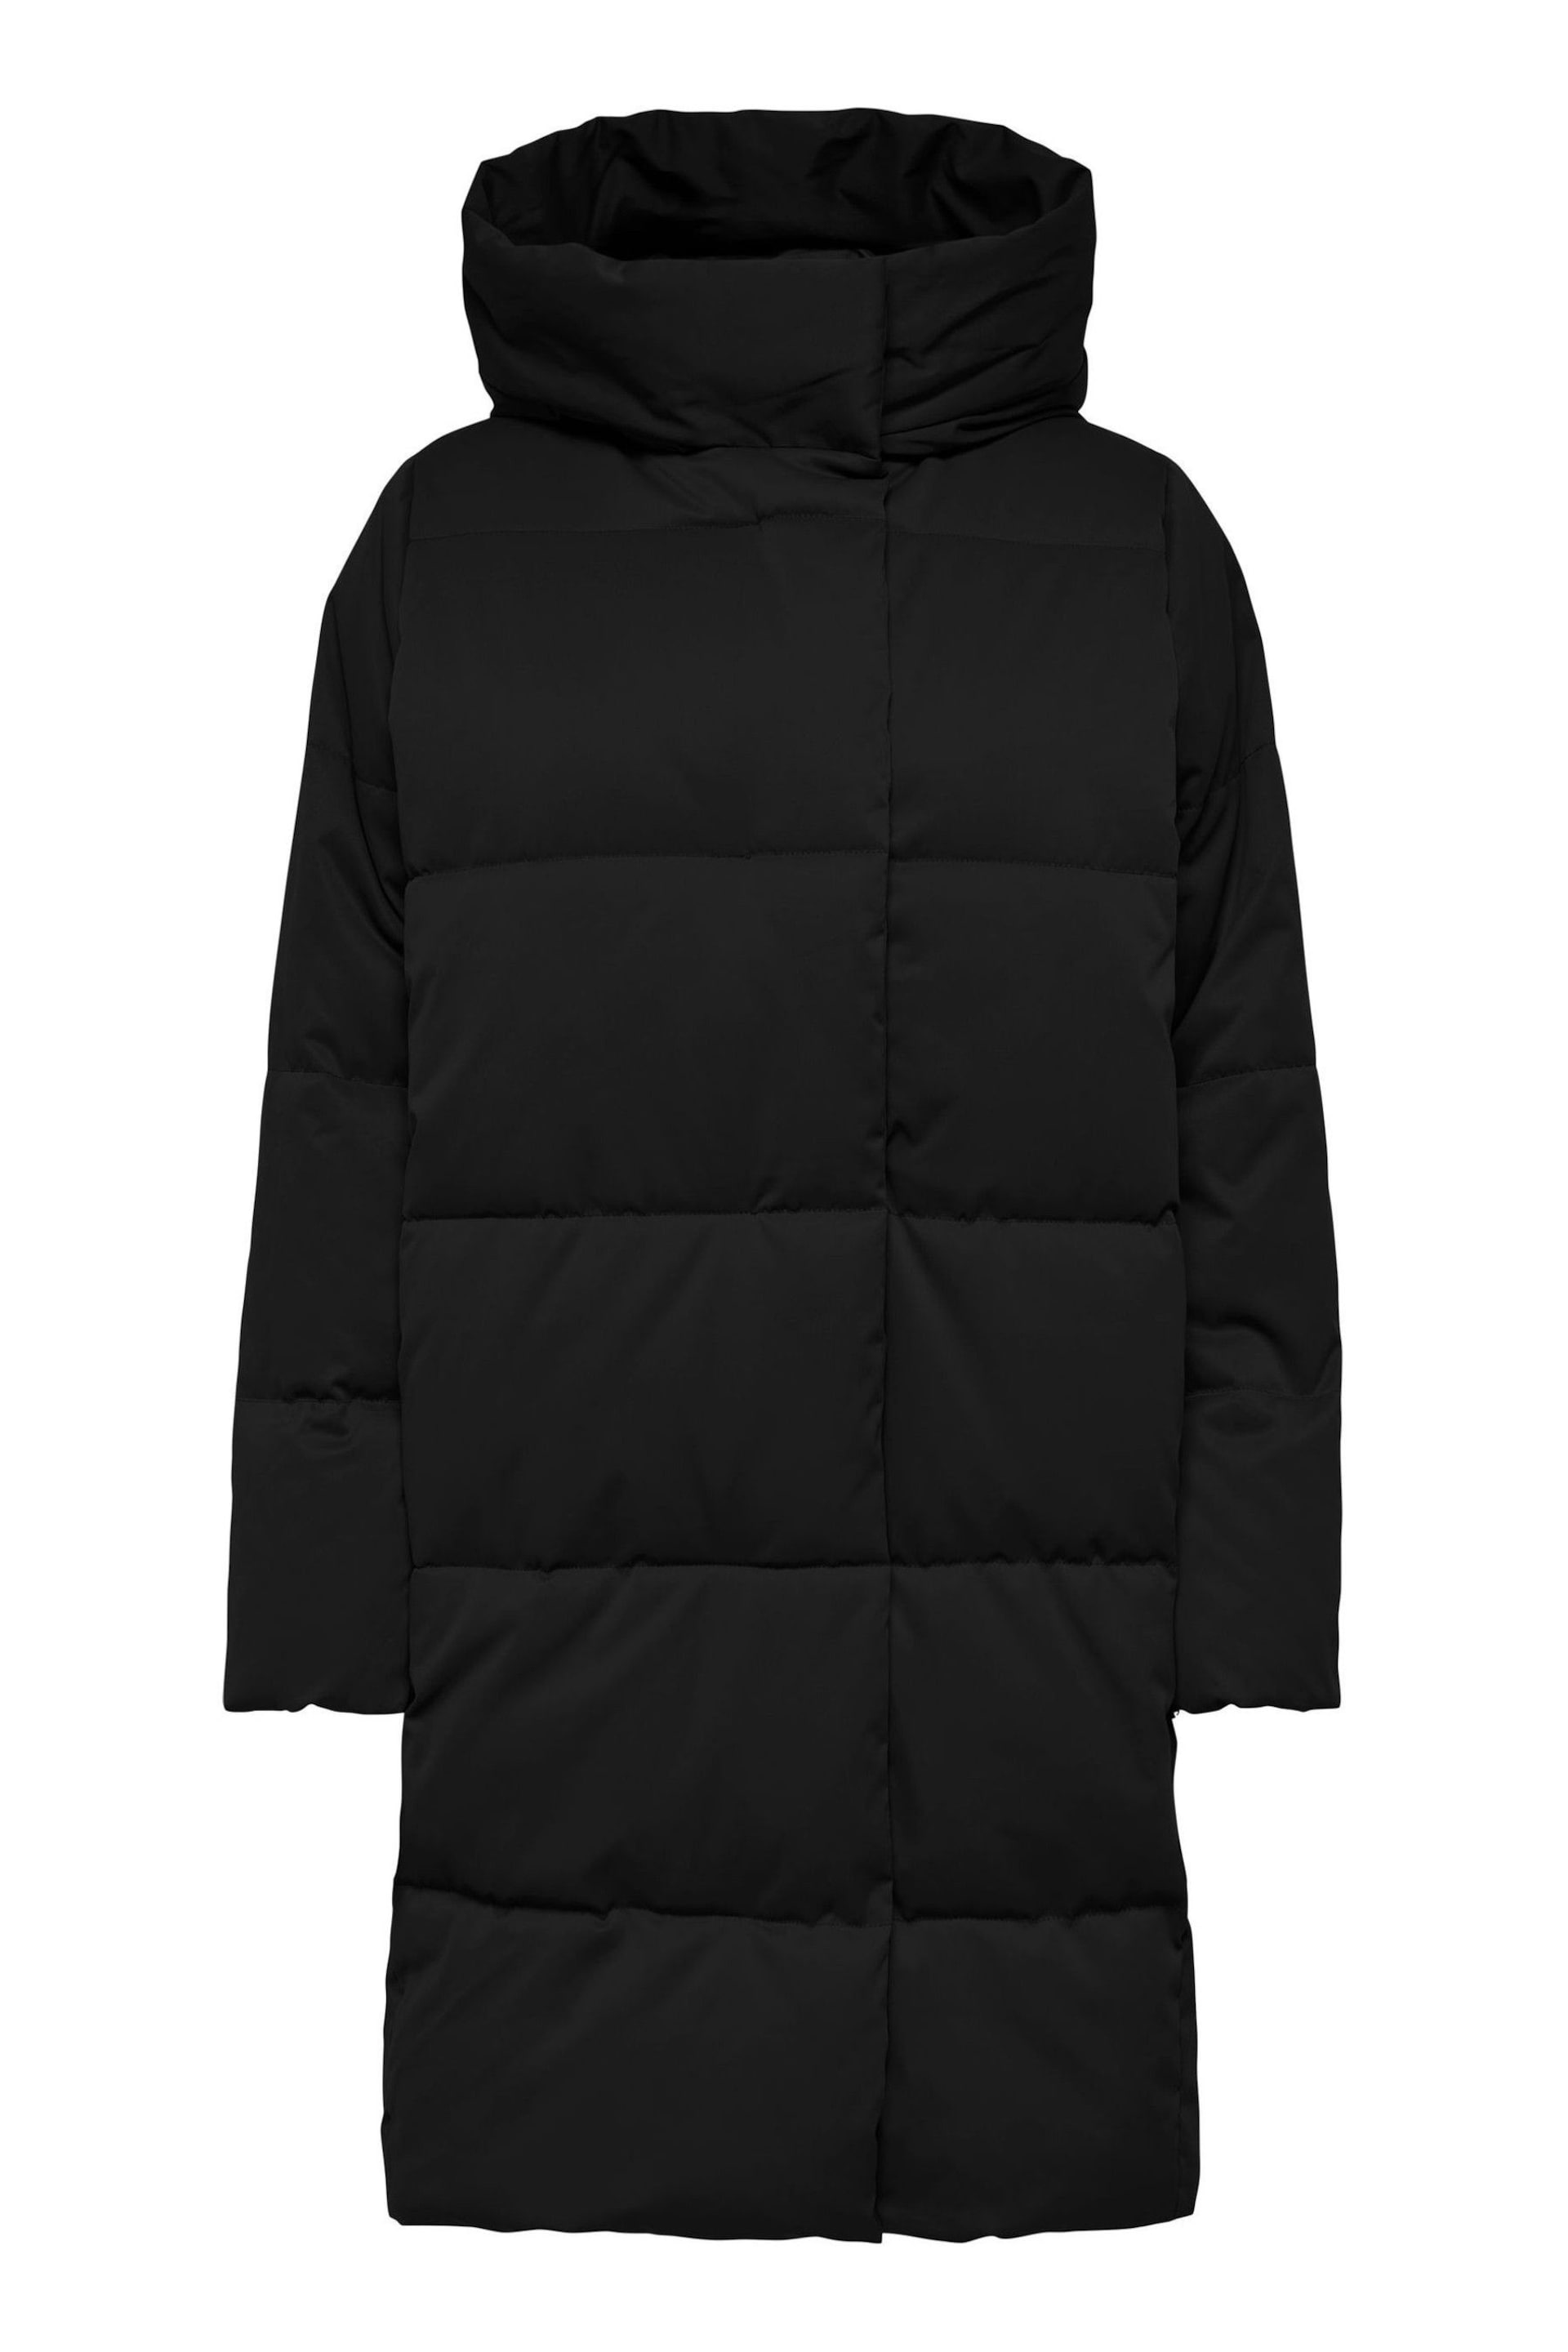 JDY Black High Neck Padded Hooded Longline Coat - Image 7 of 7